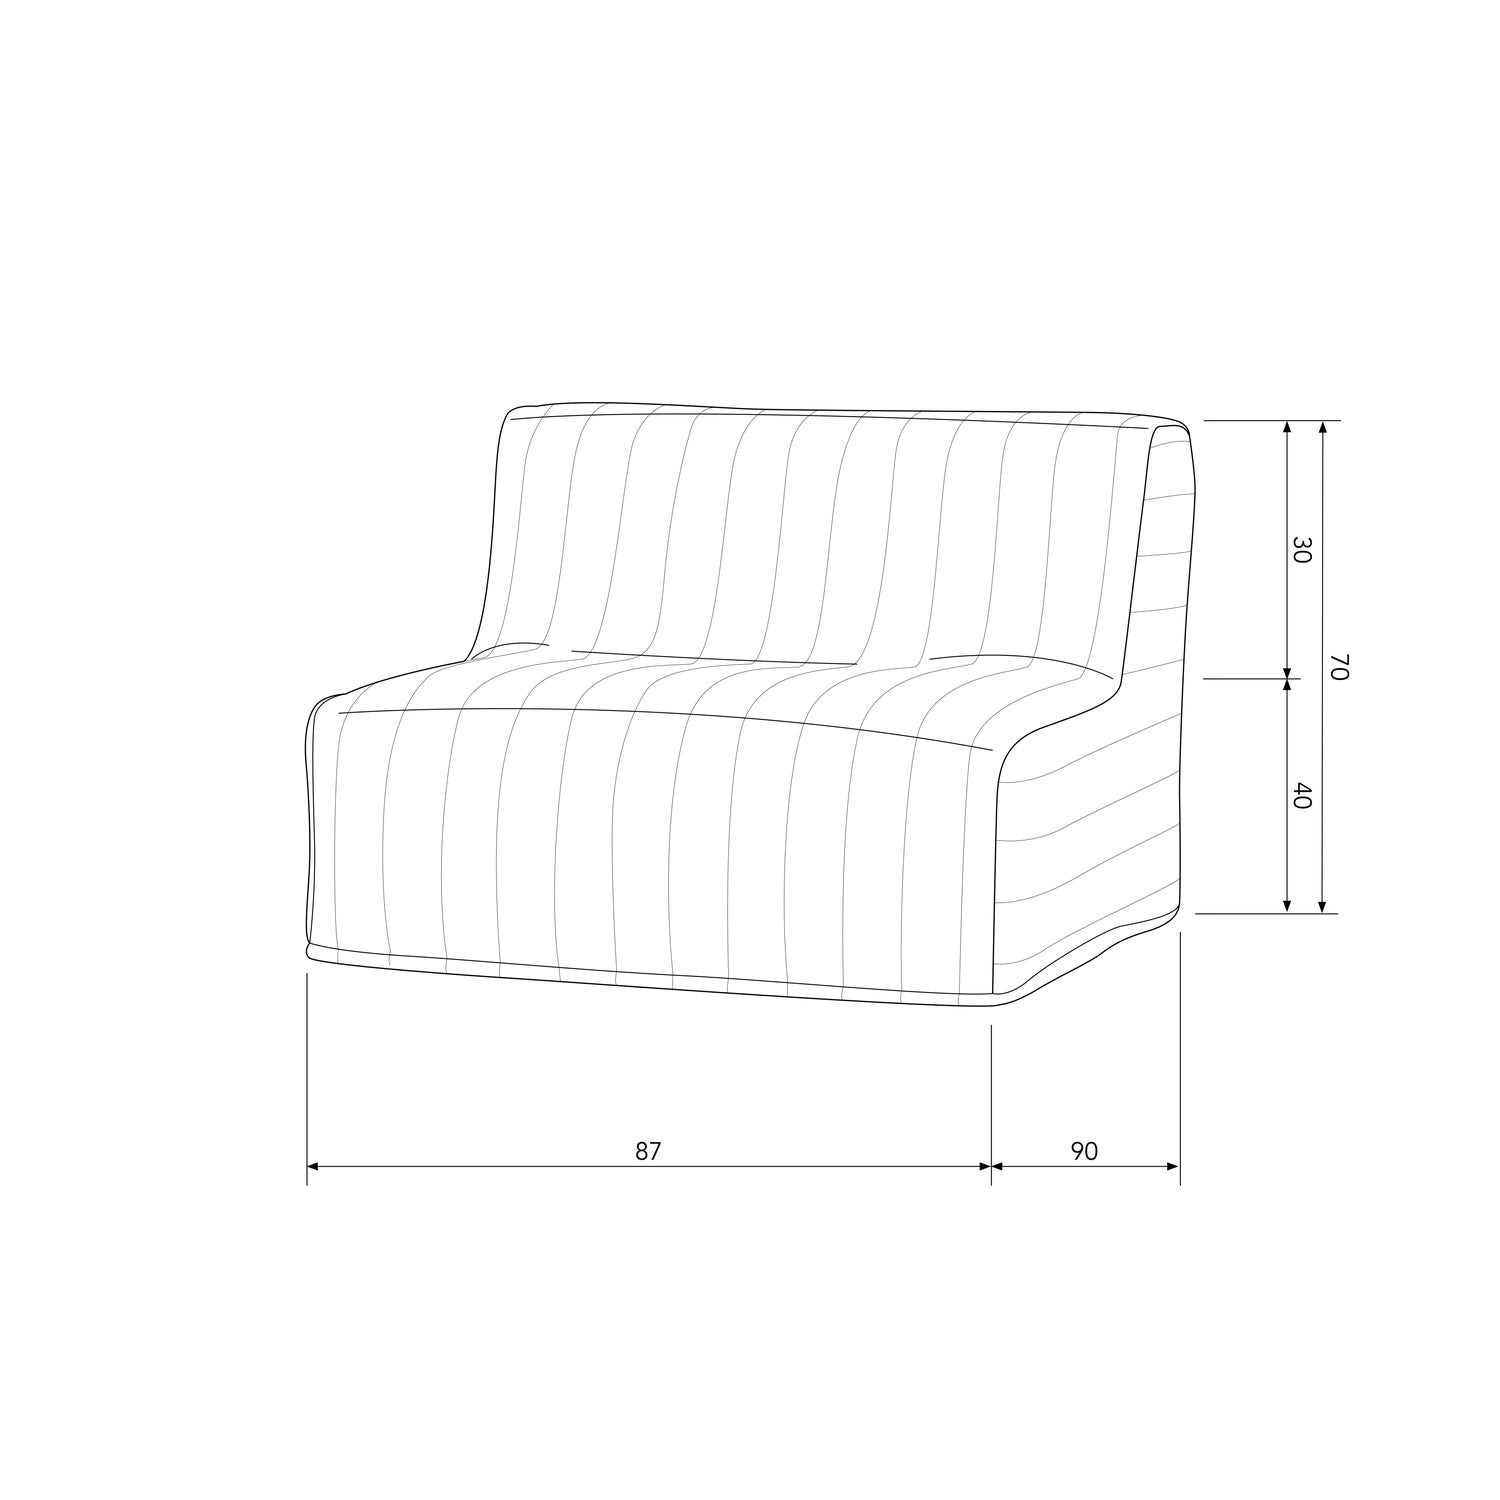 400506-Z-400506-S-50_BT_Sit_on_Air_armchair.jpg?auto=webp&format=png&width=1500&height=1500